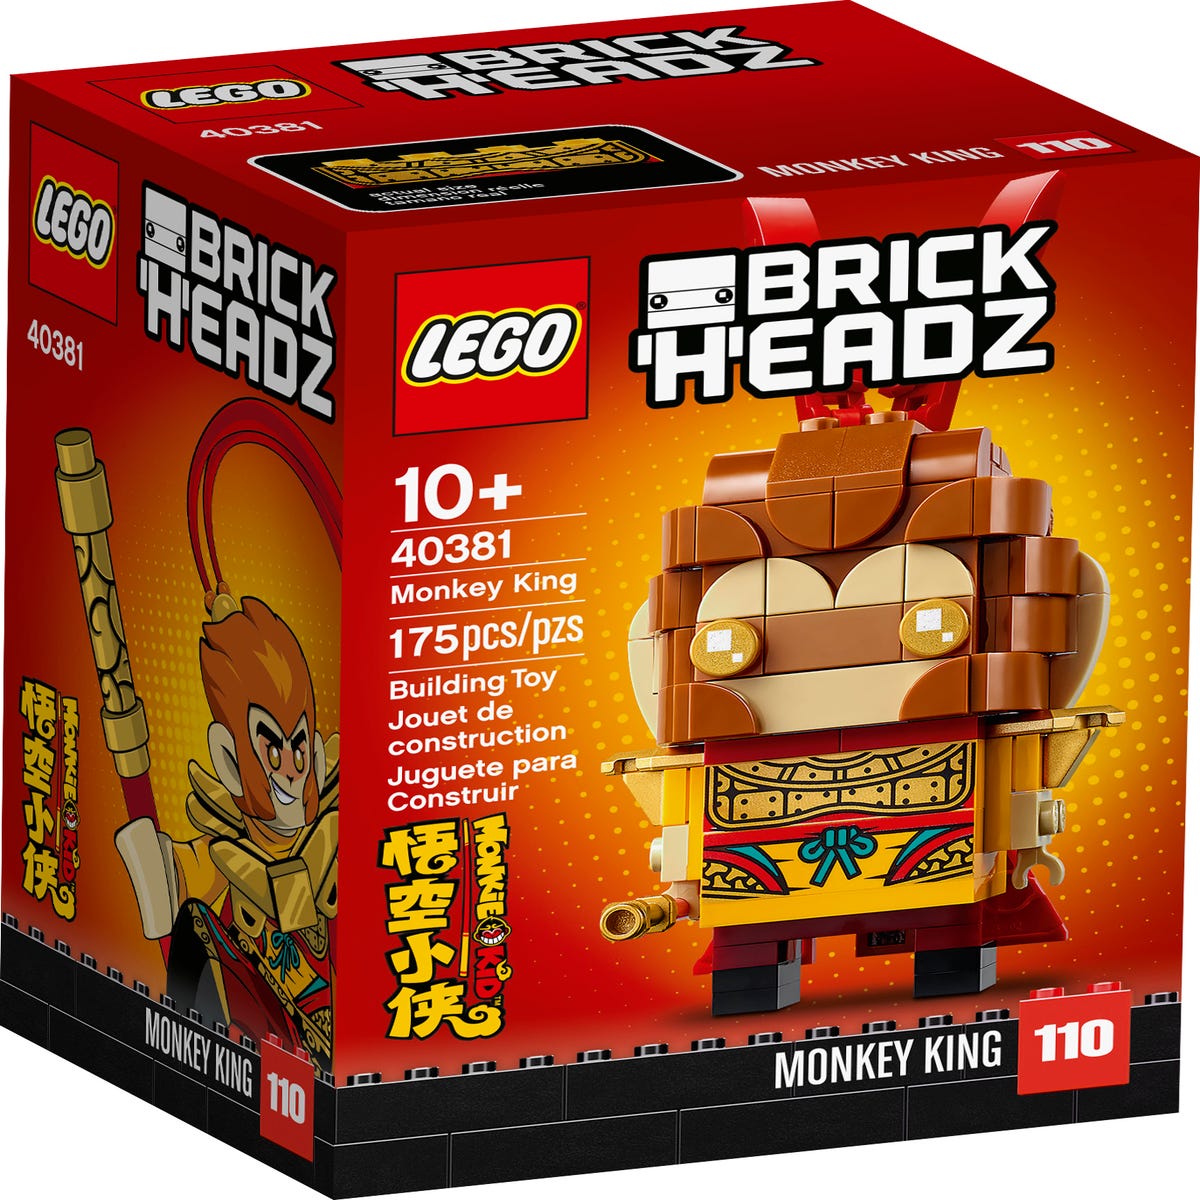 Monkey King Brickheadz Buy Online At The Official Lego Shop Us